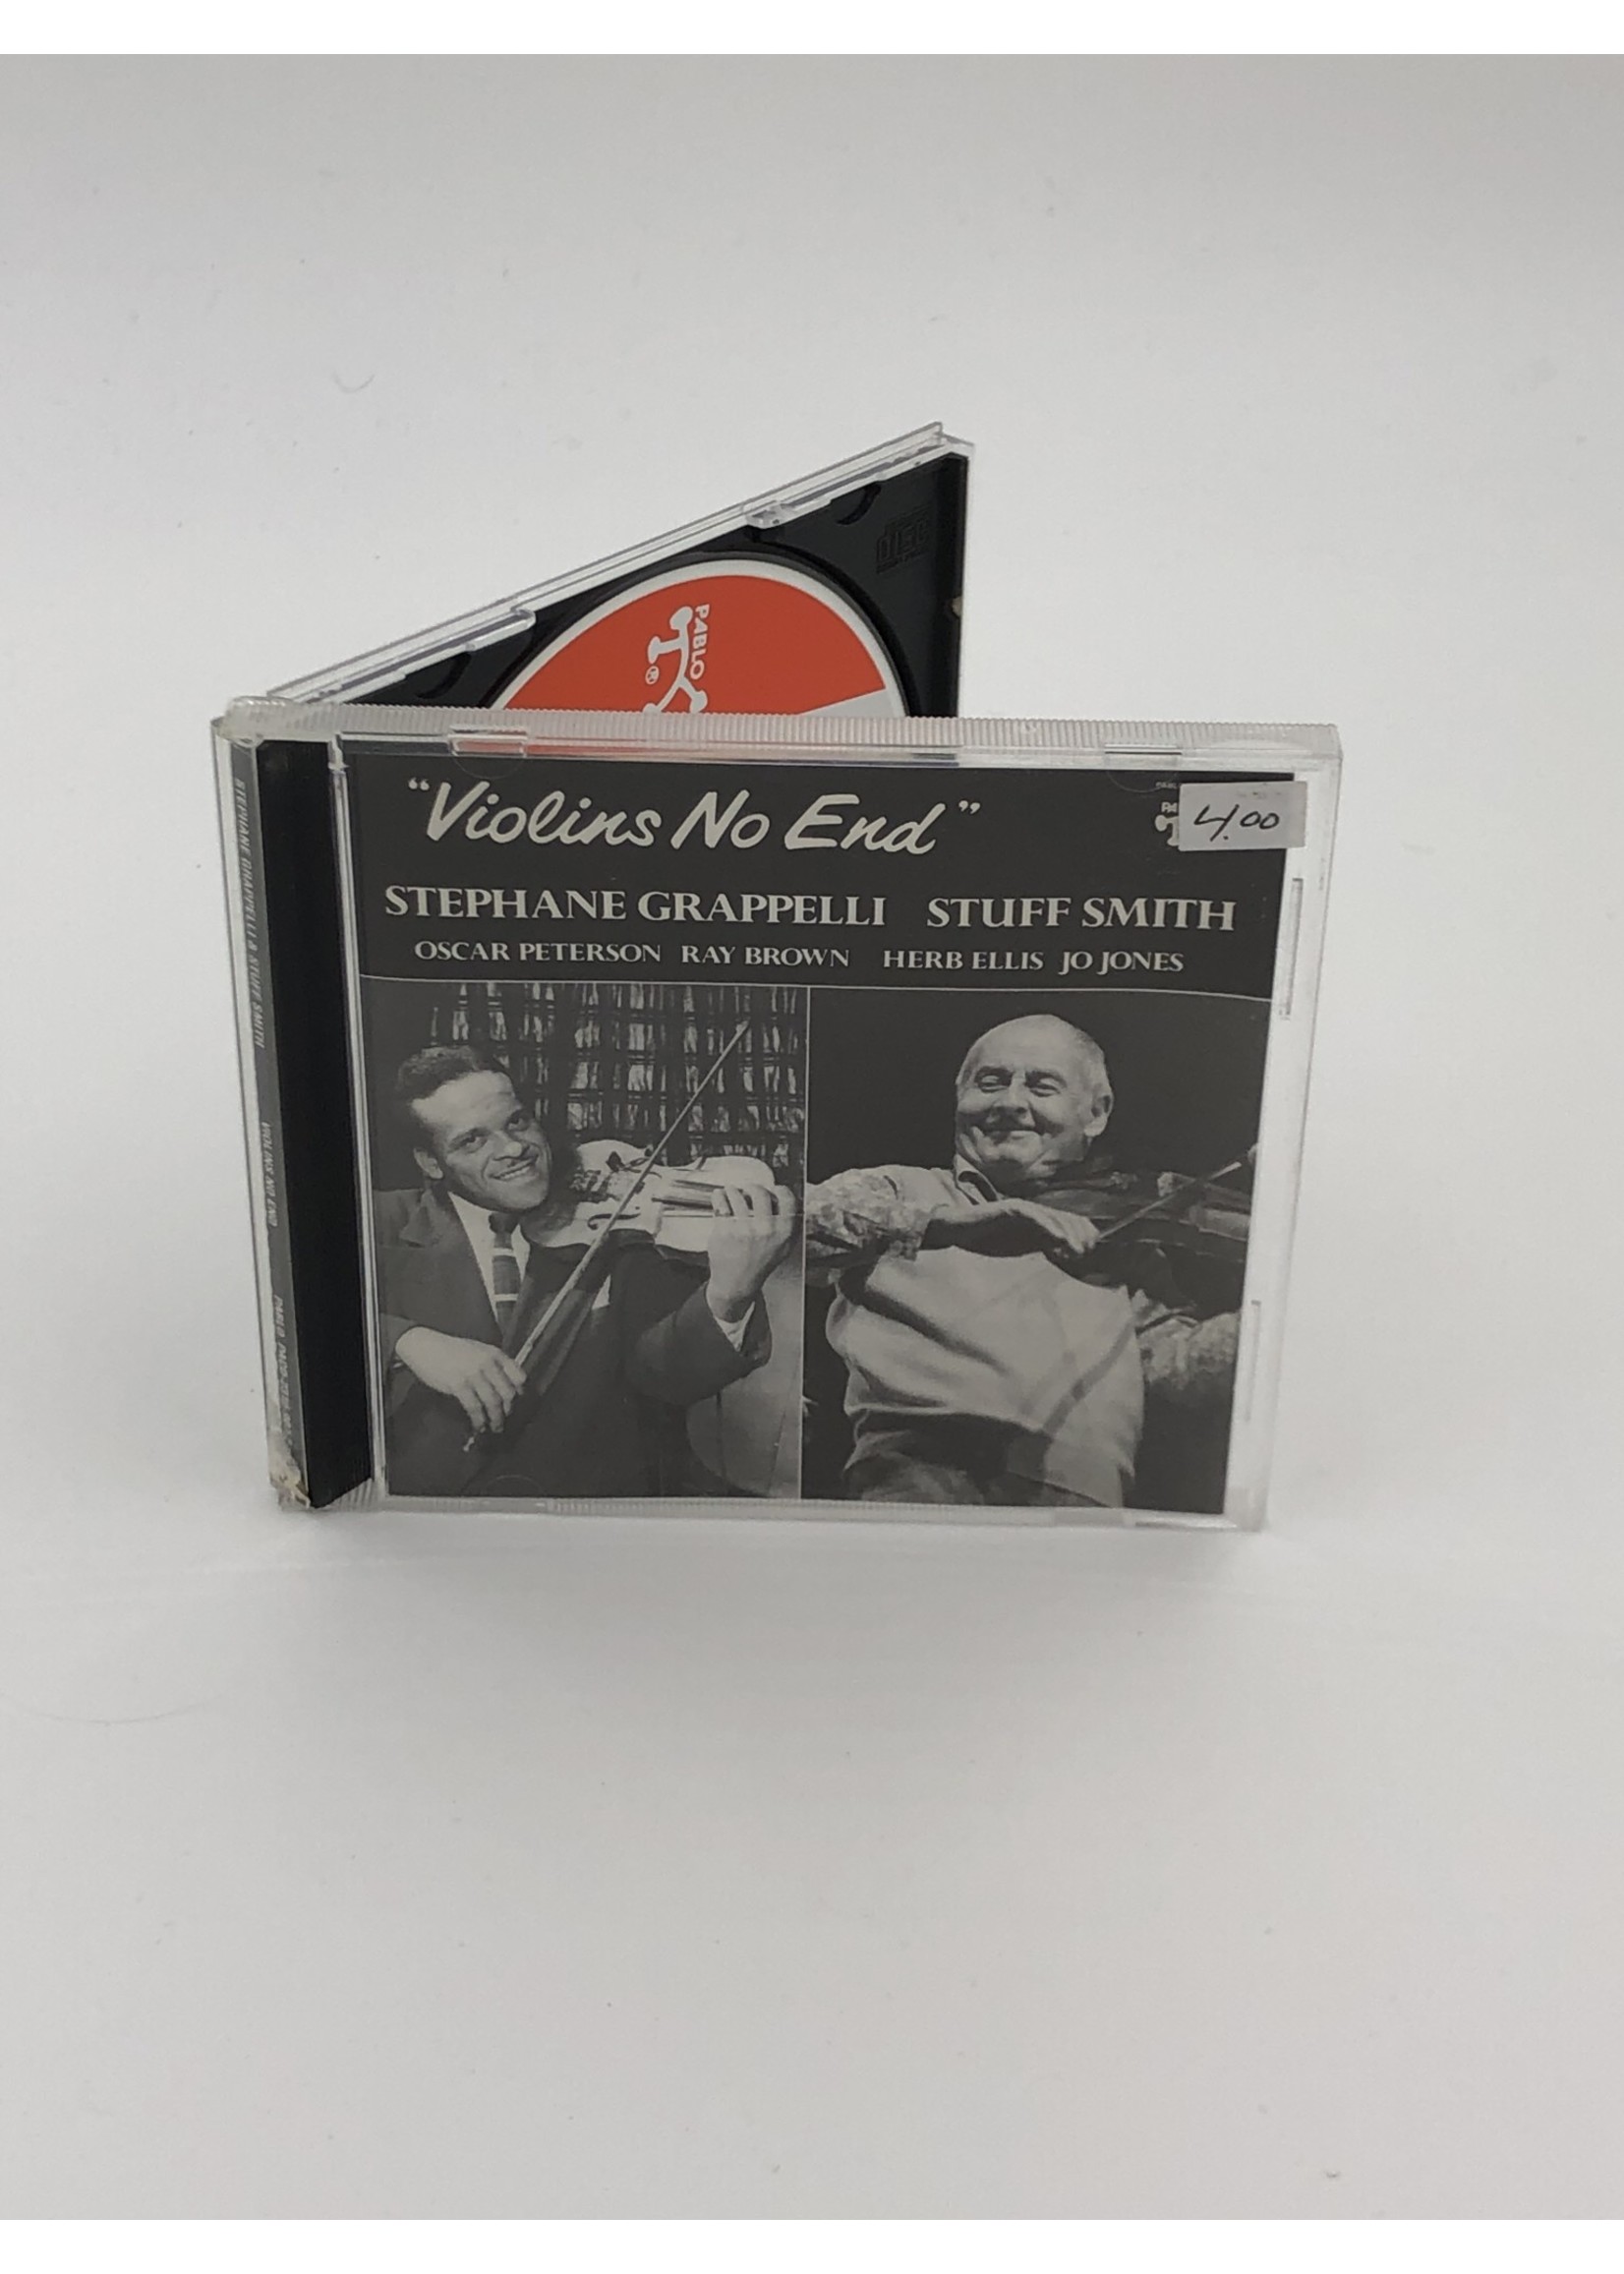 CD Stephane Grappelli & Stuff Smith: Violins No End CD